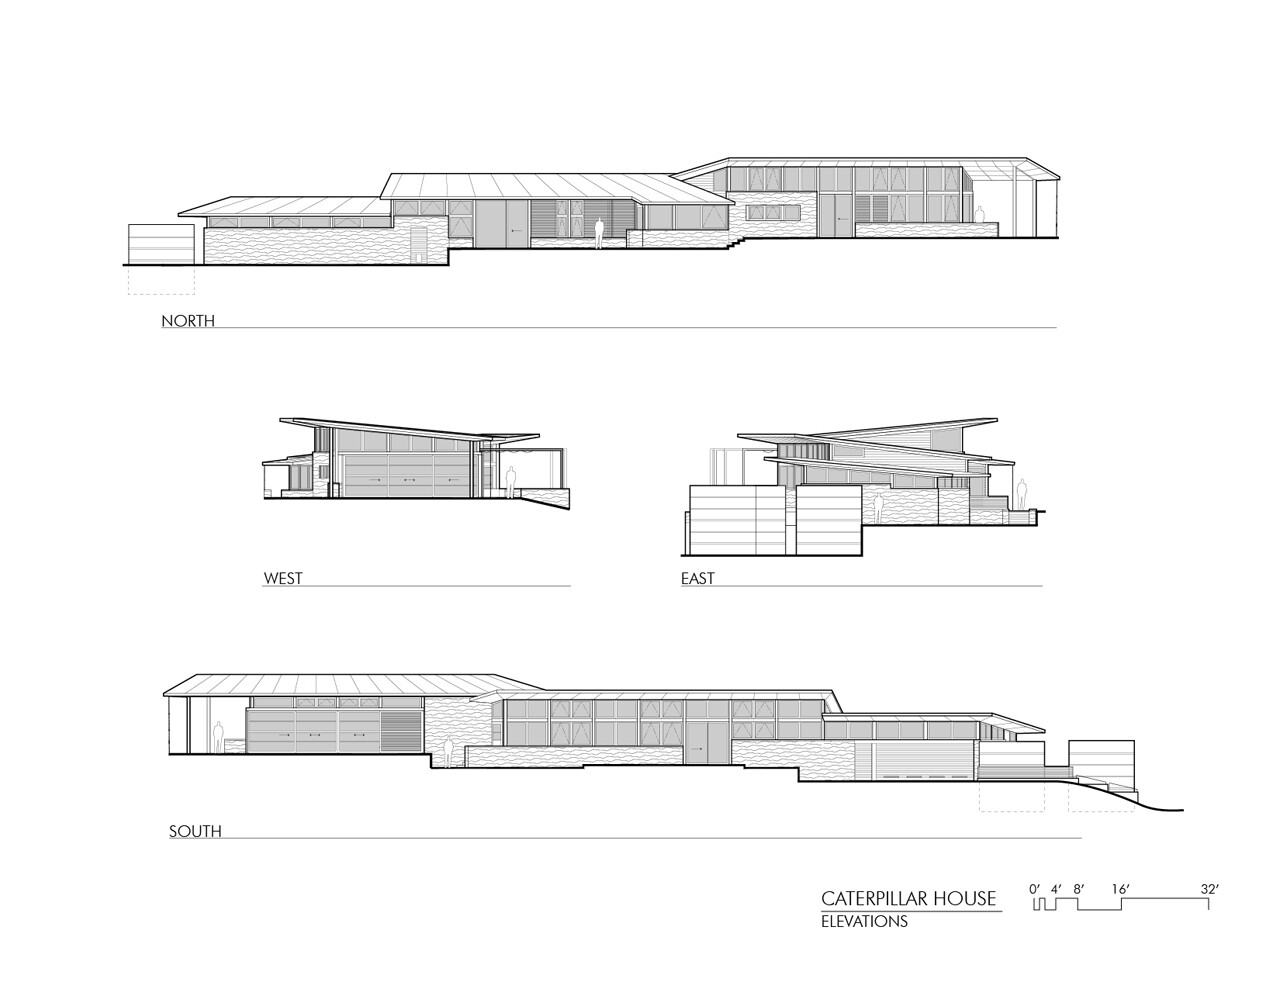 CaterpillarHouse by Feldman Architecture - www.homeworlddesign. com